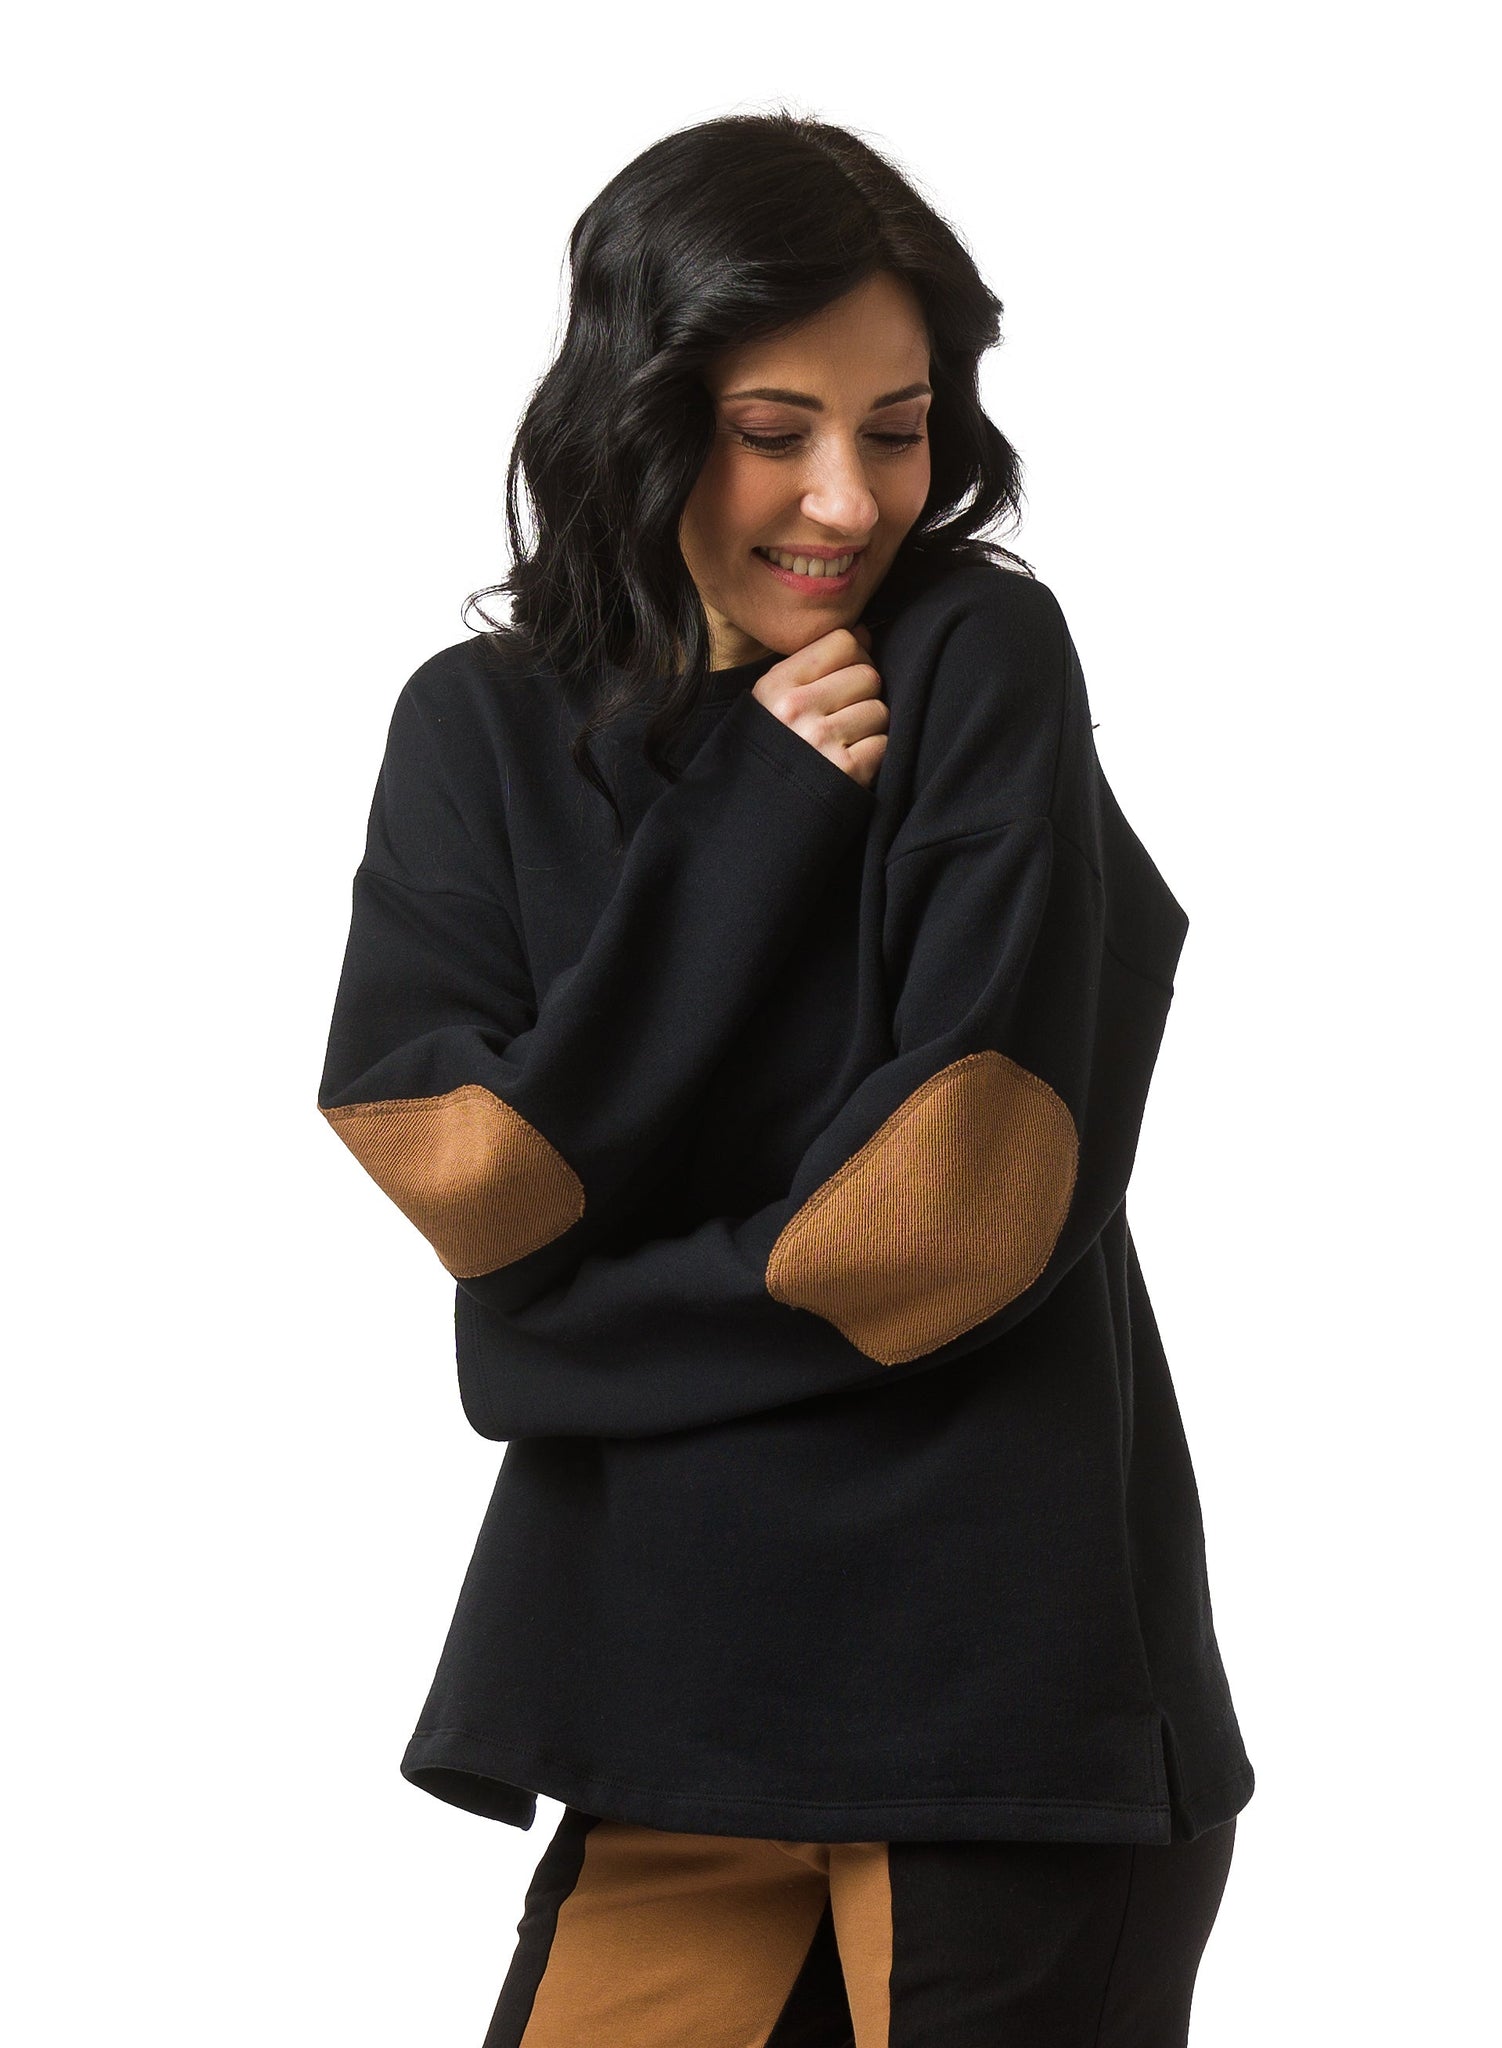 Black Organic Cotton Fleece unisex sweater. Features Nutmeg elbow patch in twill fabric. 